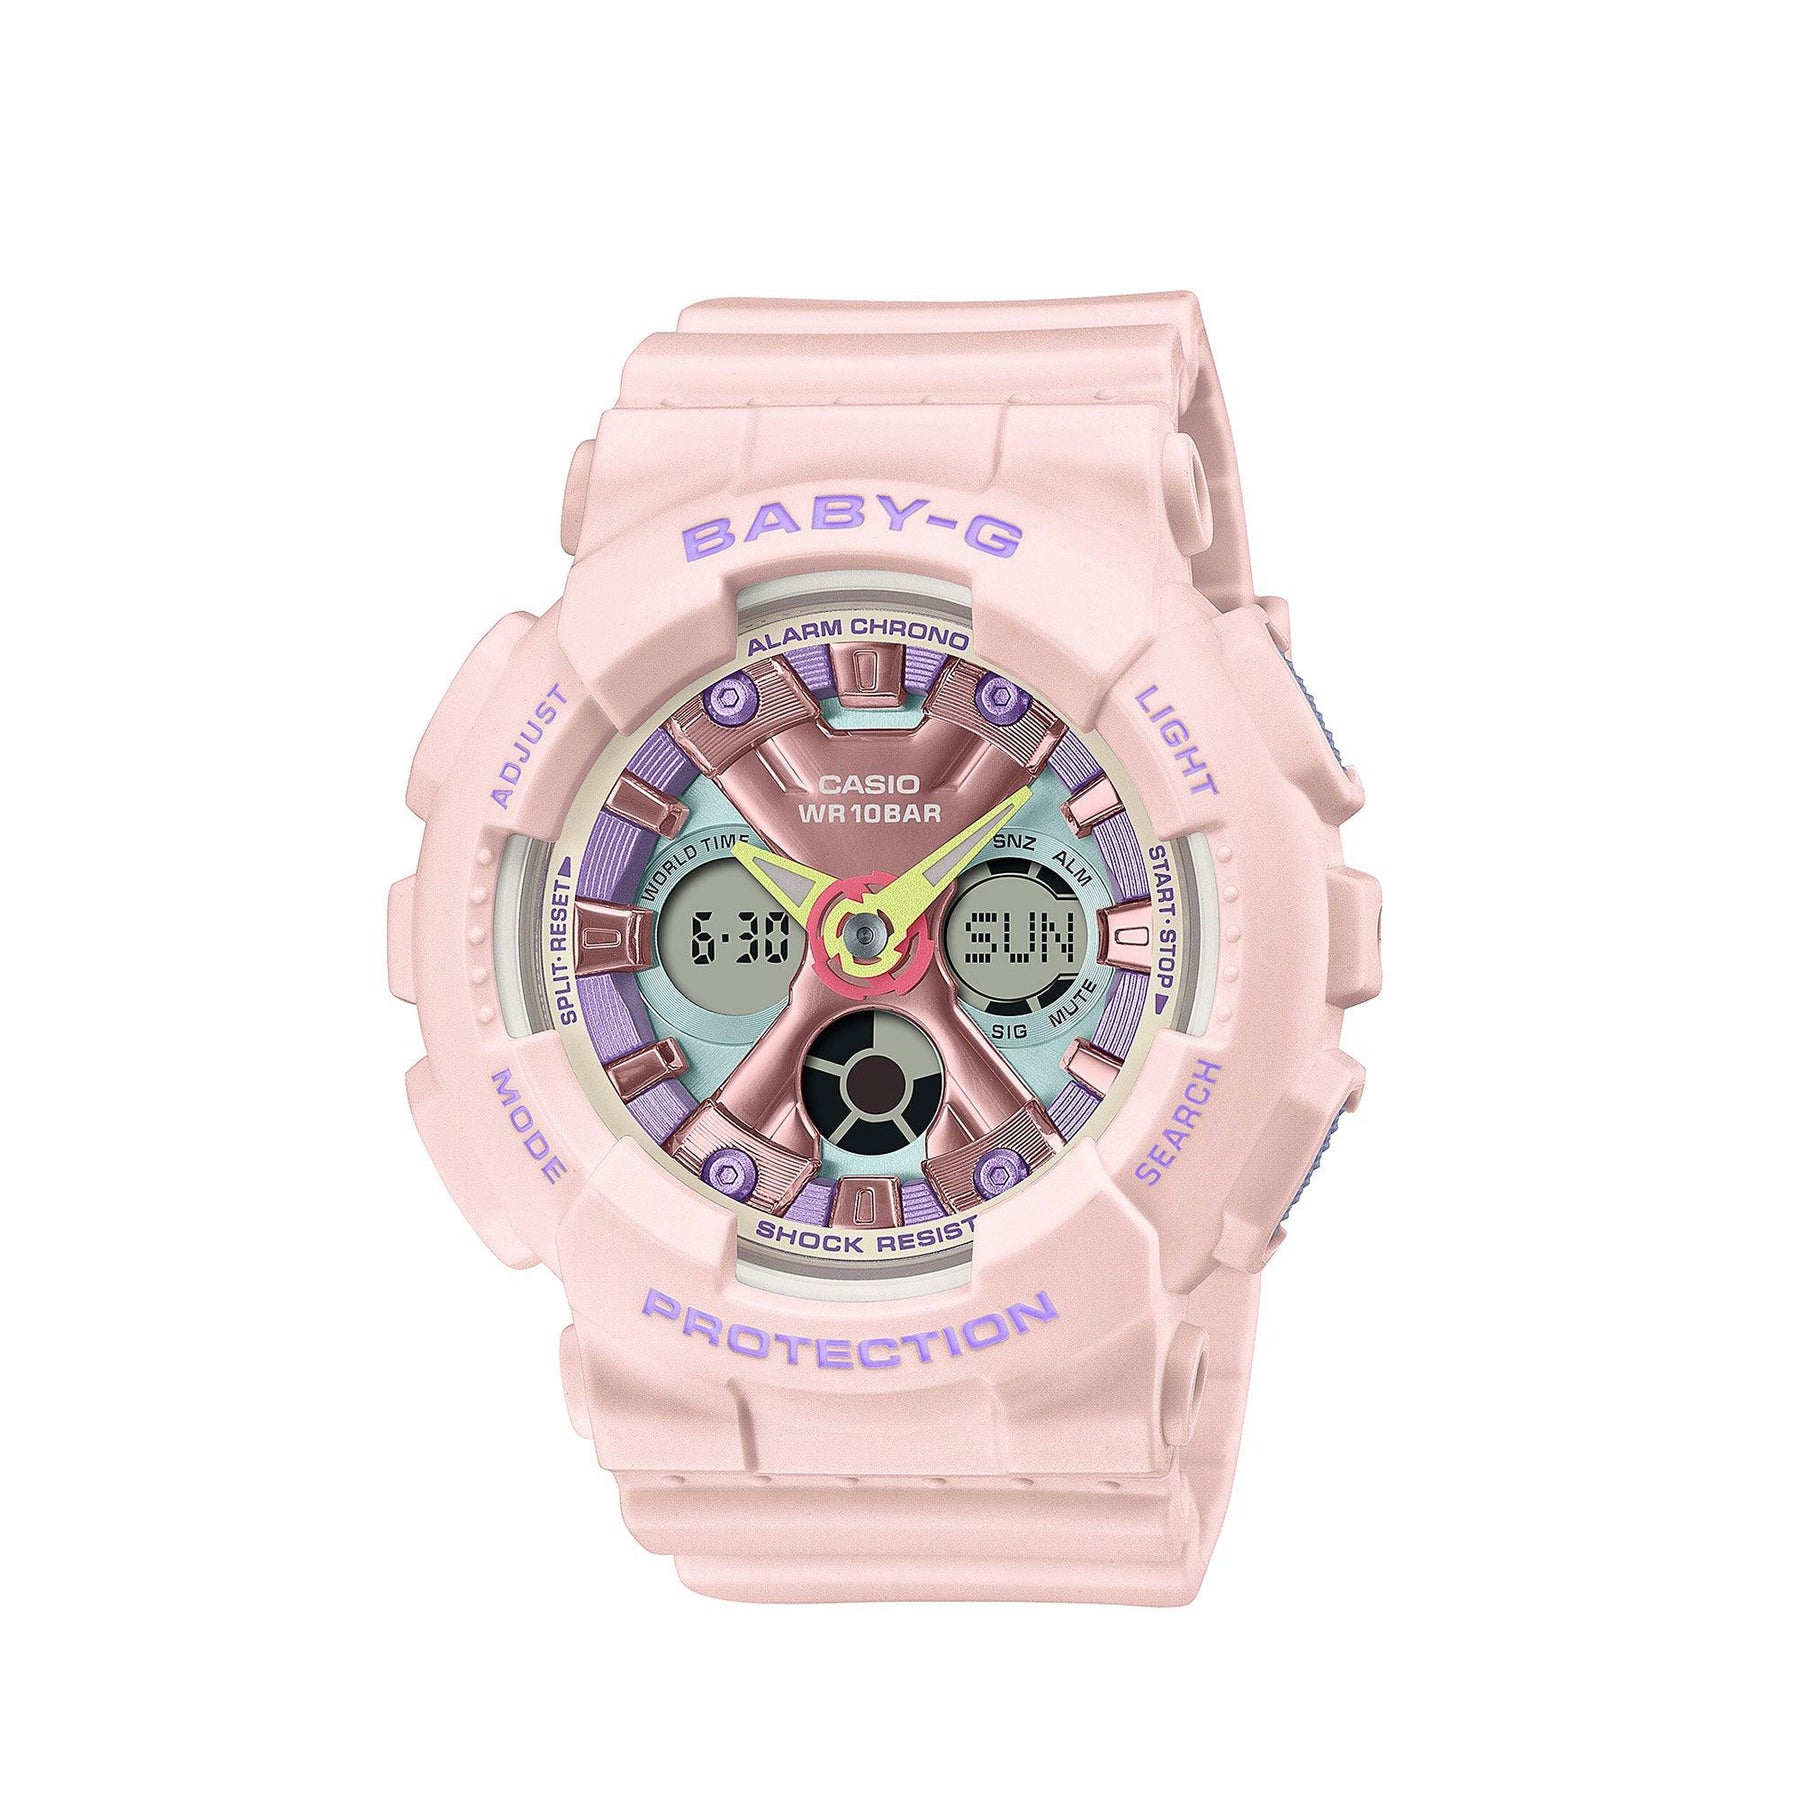 Casio Baby-G BA-130 Series Pastel Metallic Pink Watch BA-130PM-4A - Wallace Bishop